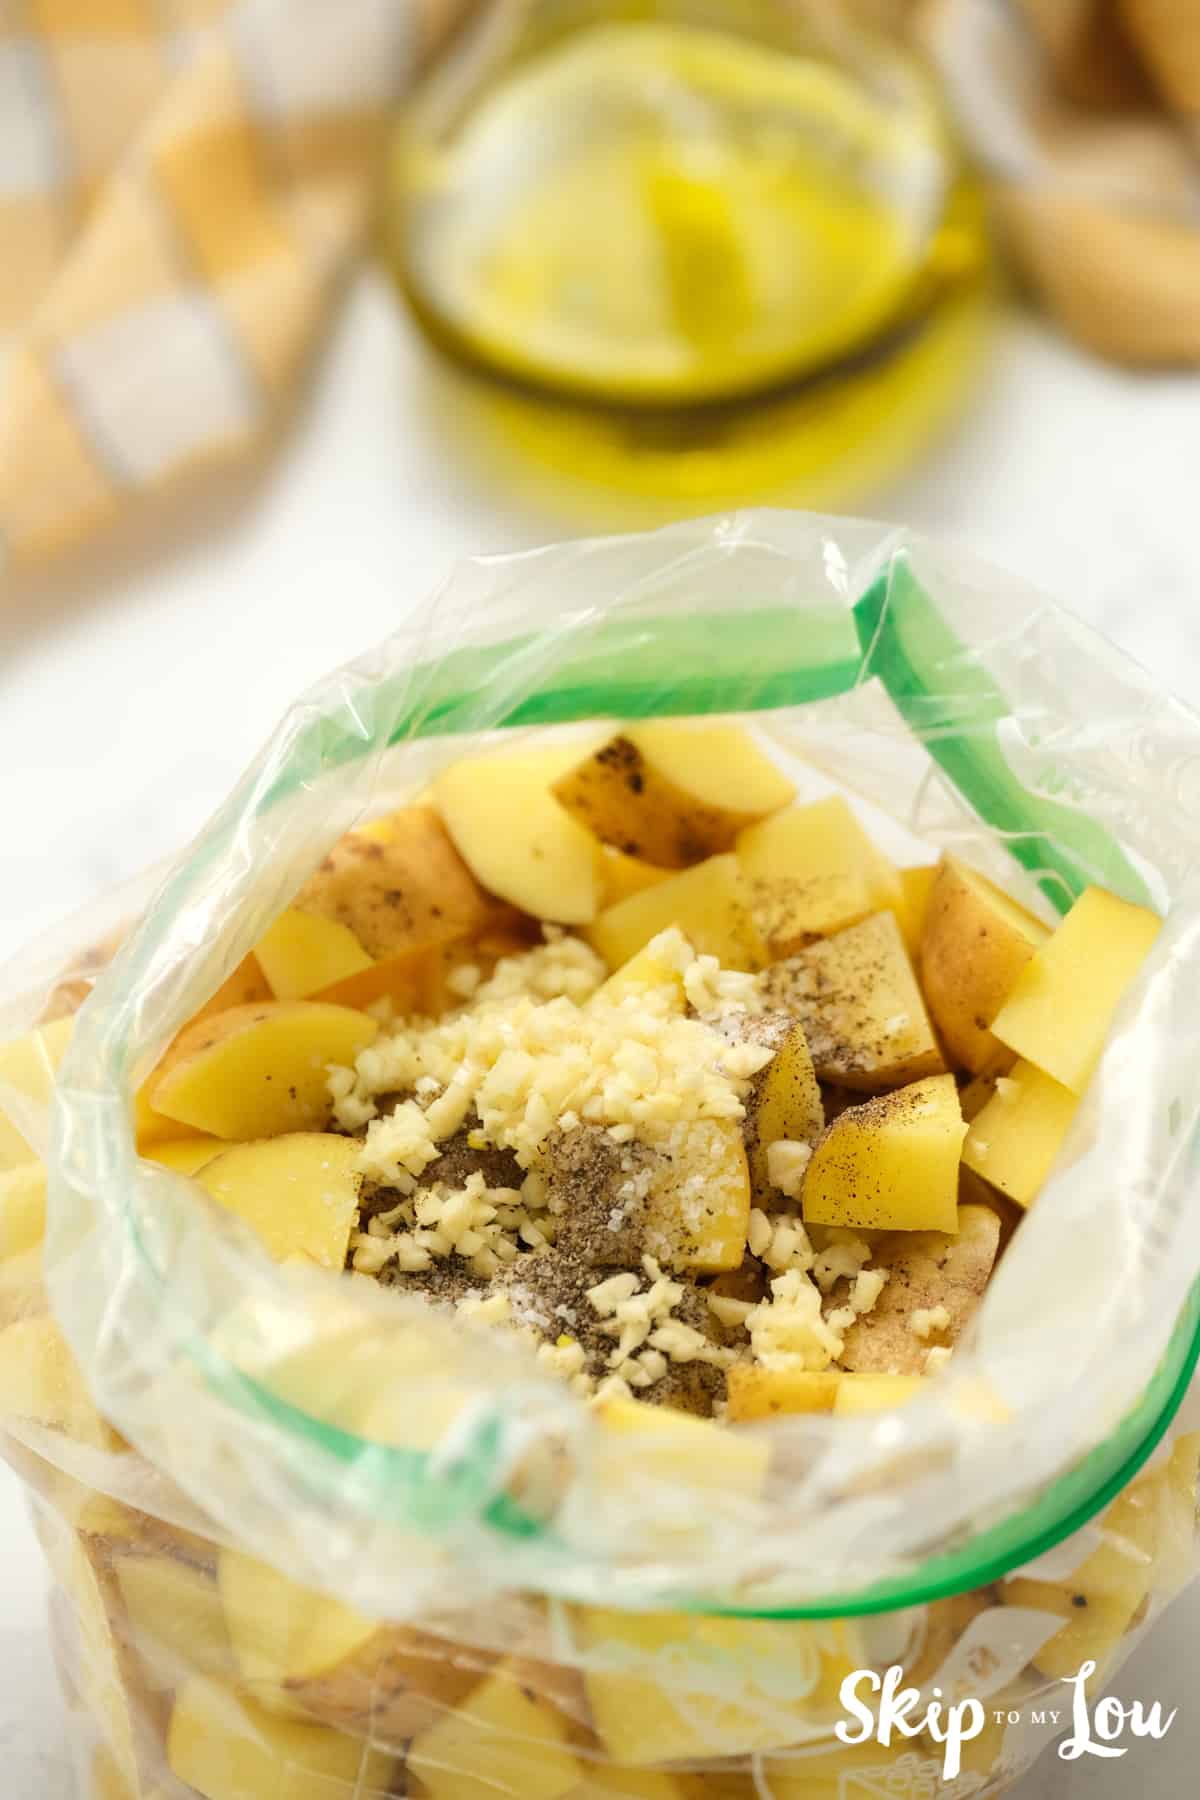 put diced potatoes in ziplock bag with garlic